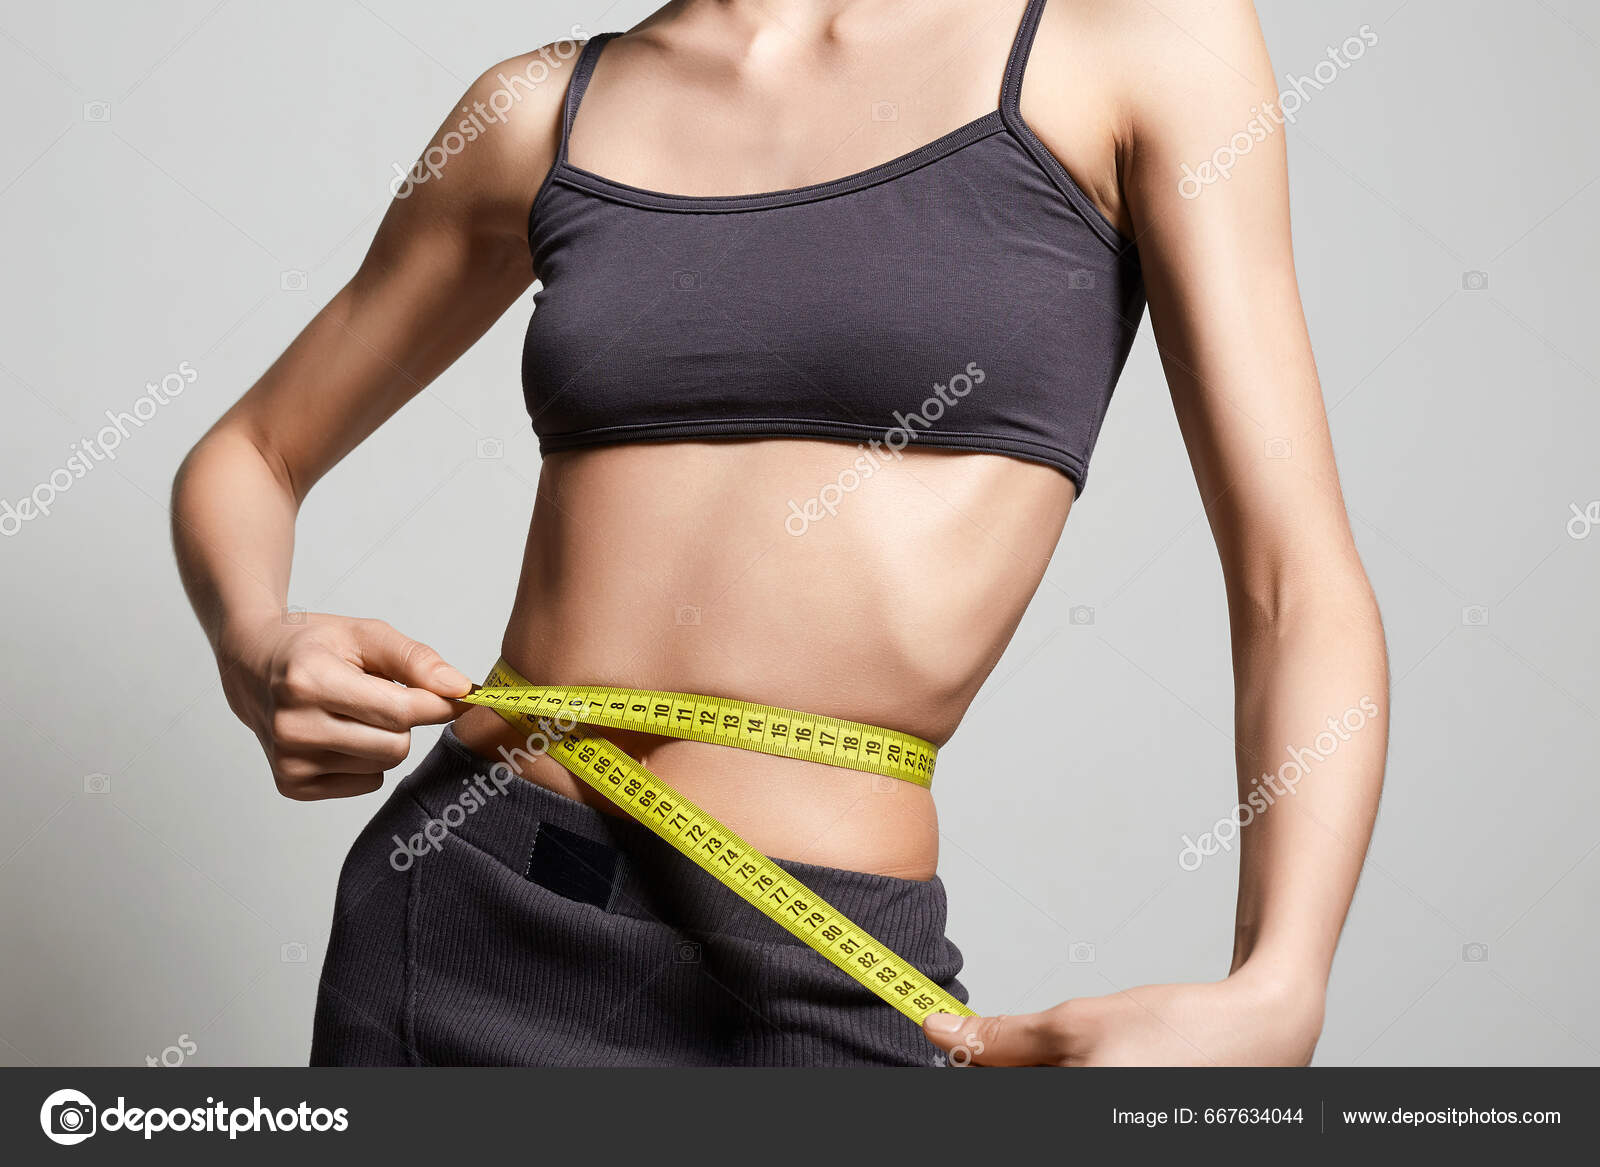 Measuring tape on girl's body Stock Photo by ©VelesStudio 117384564